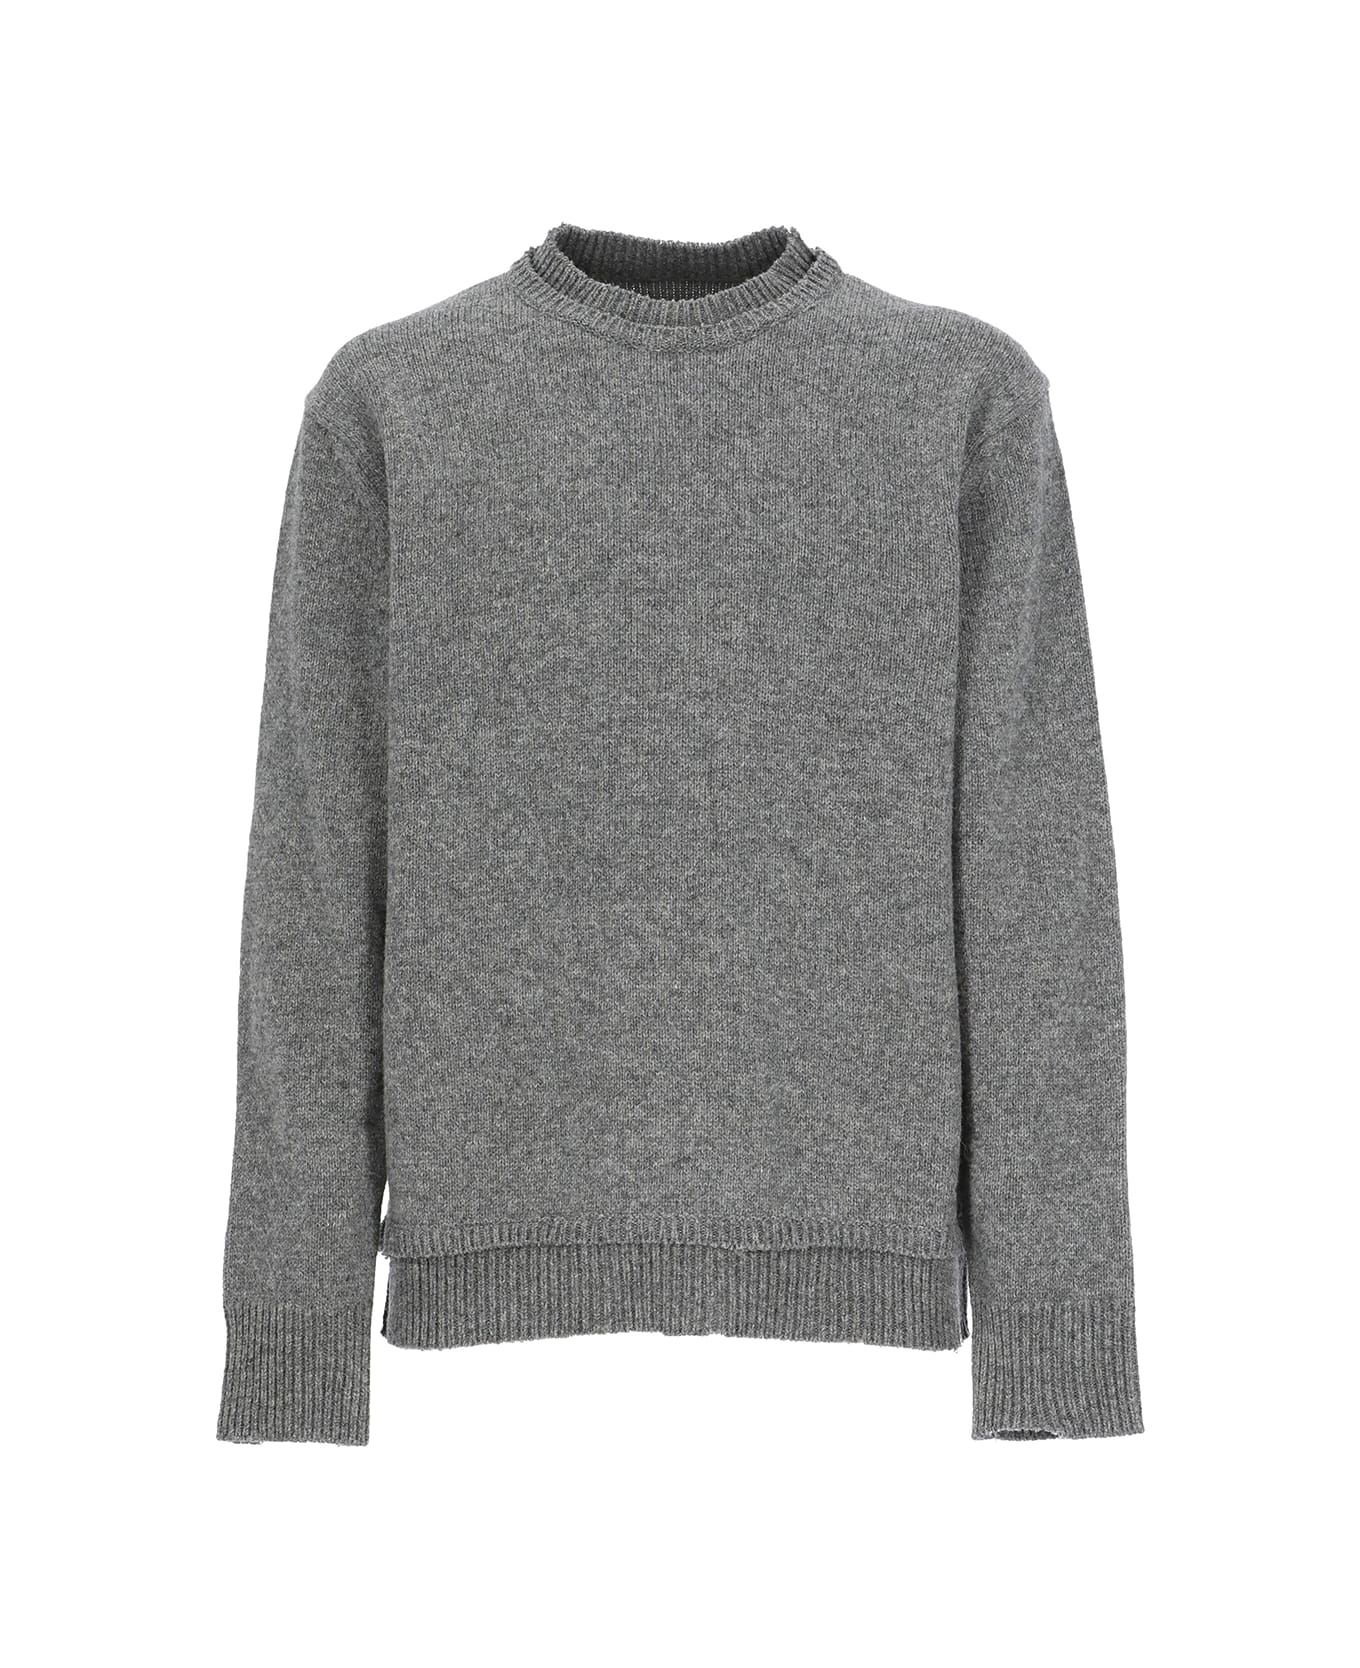 Maison Margiela Patches Sweater - Grey